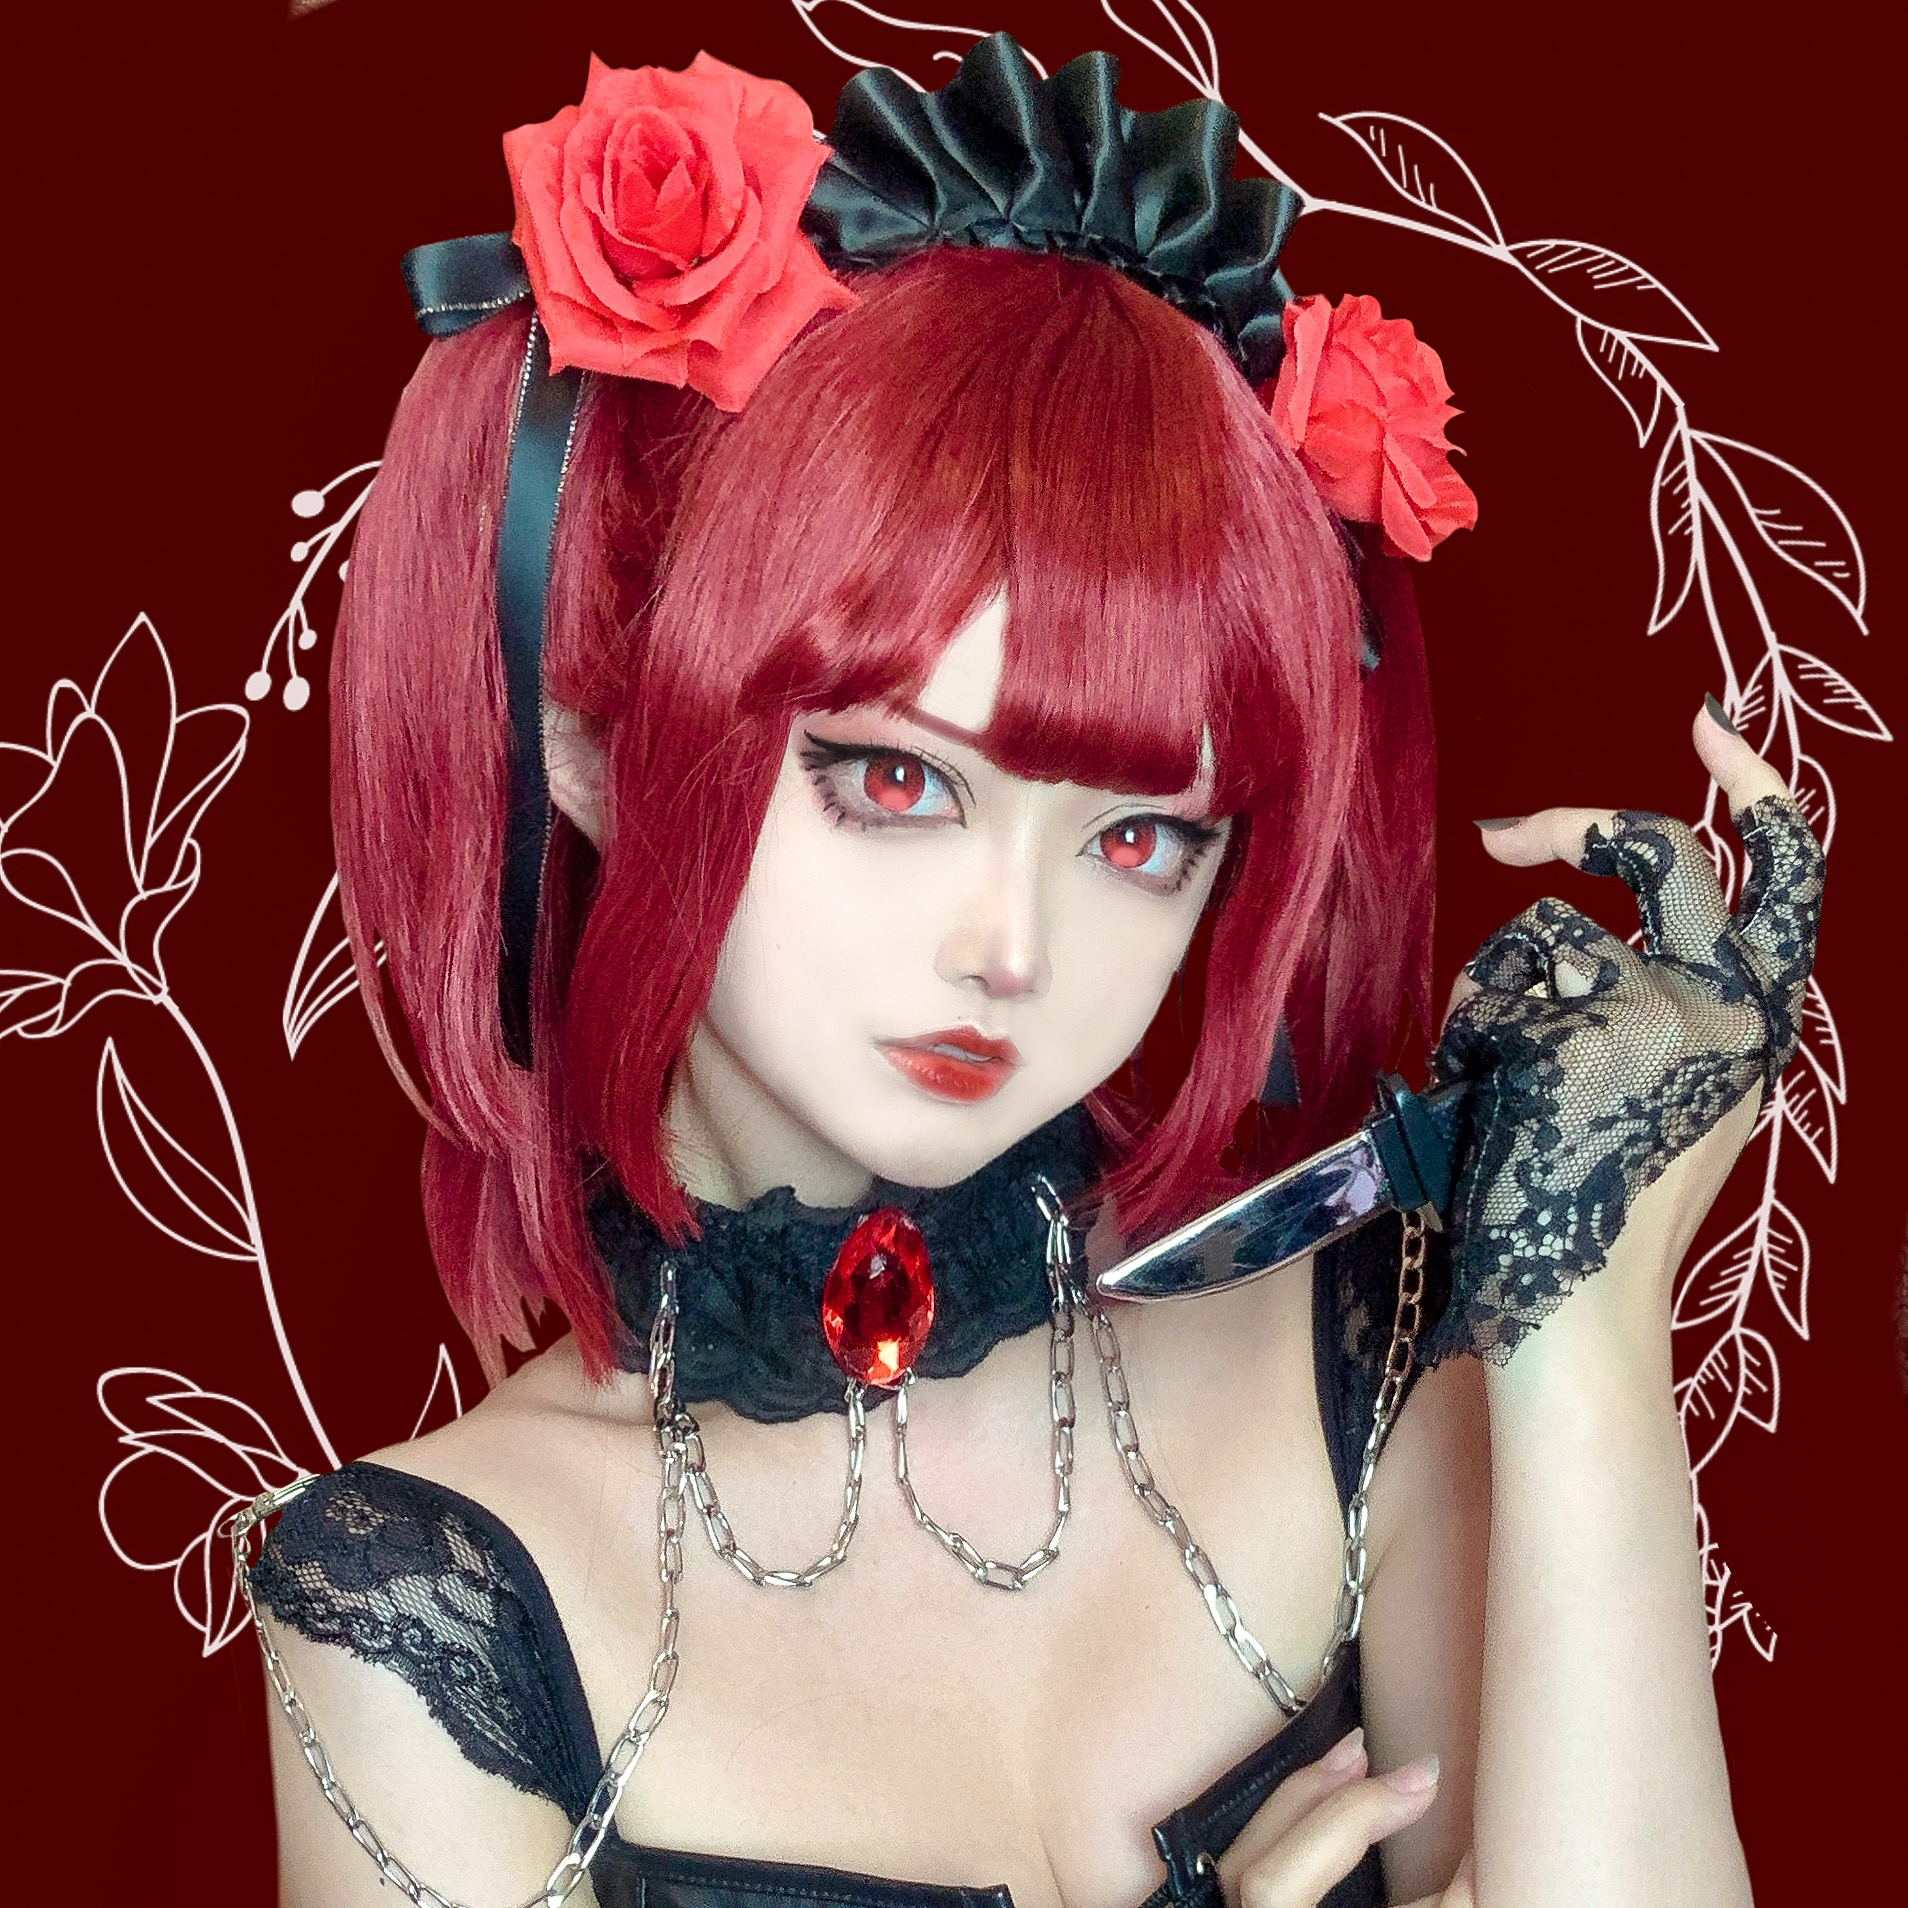 Shuan A - red rose